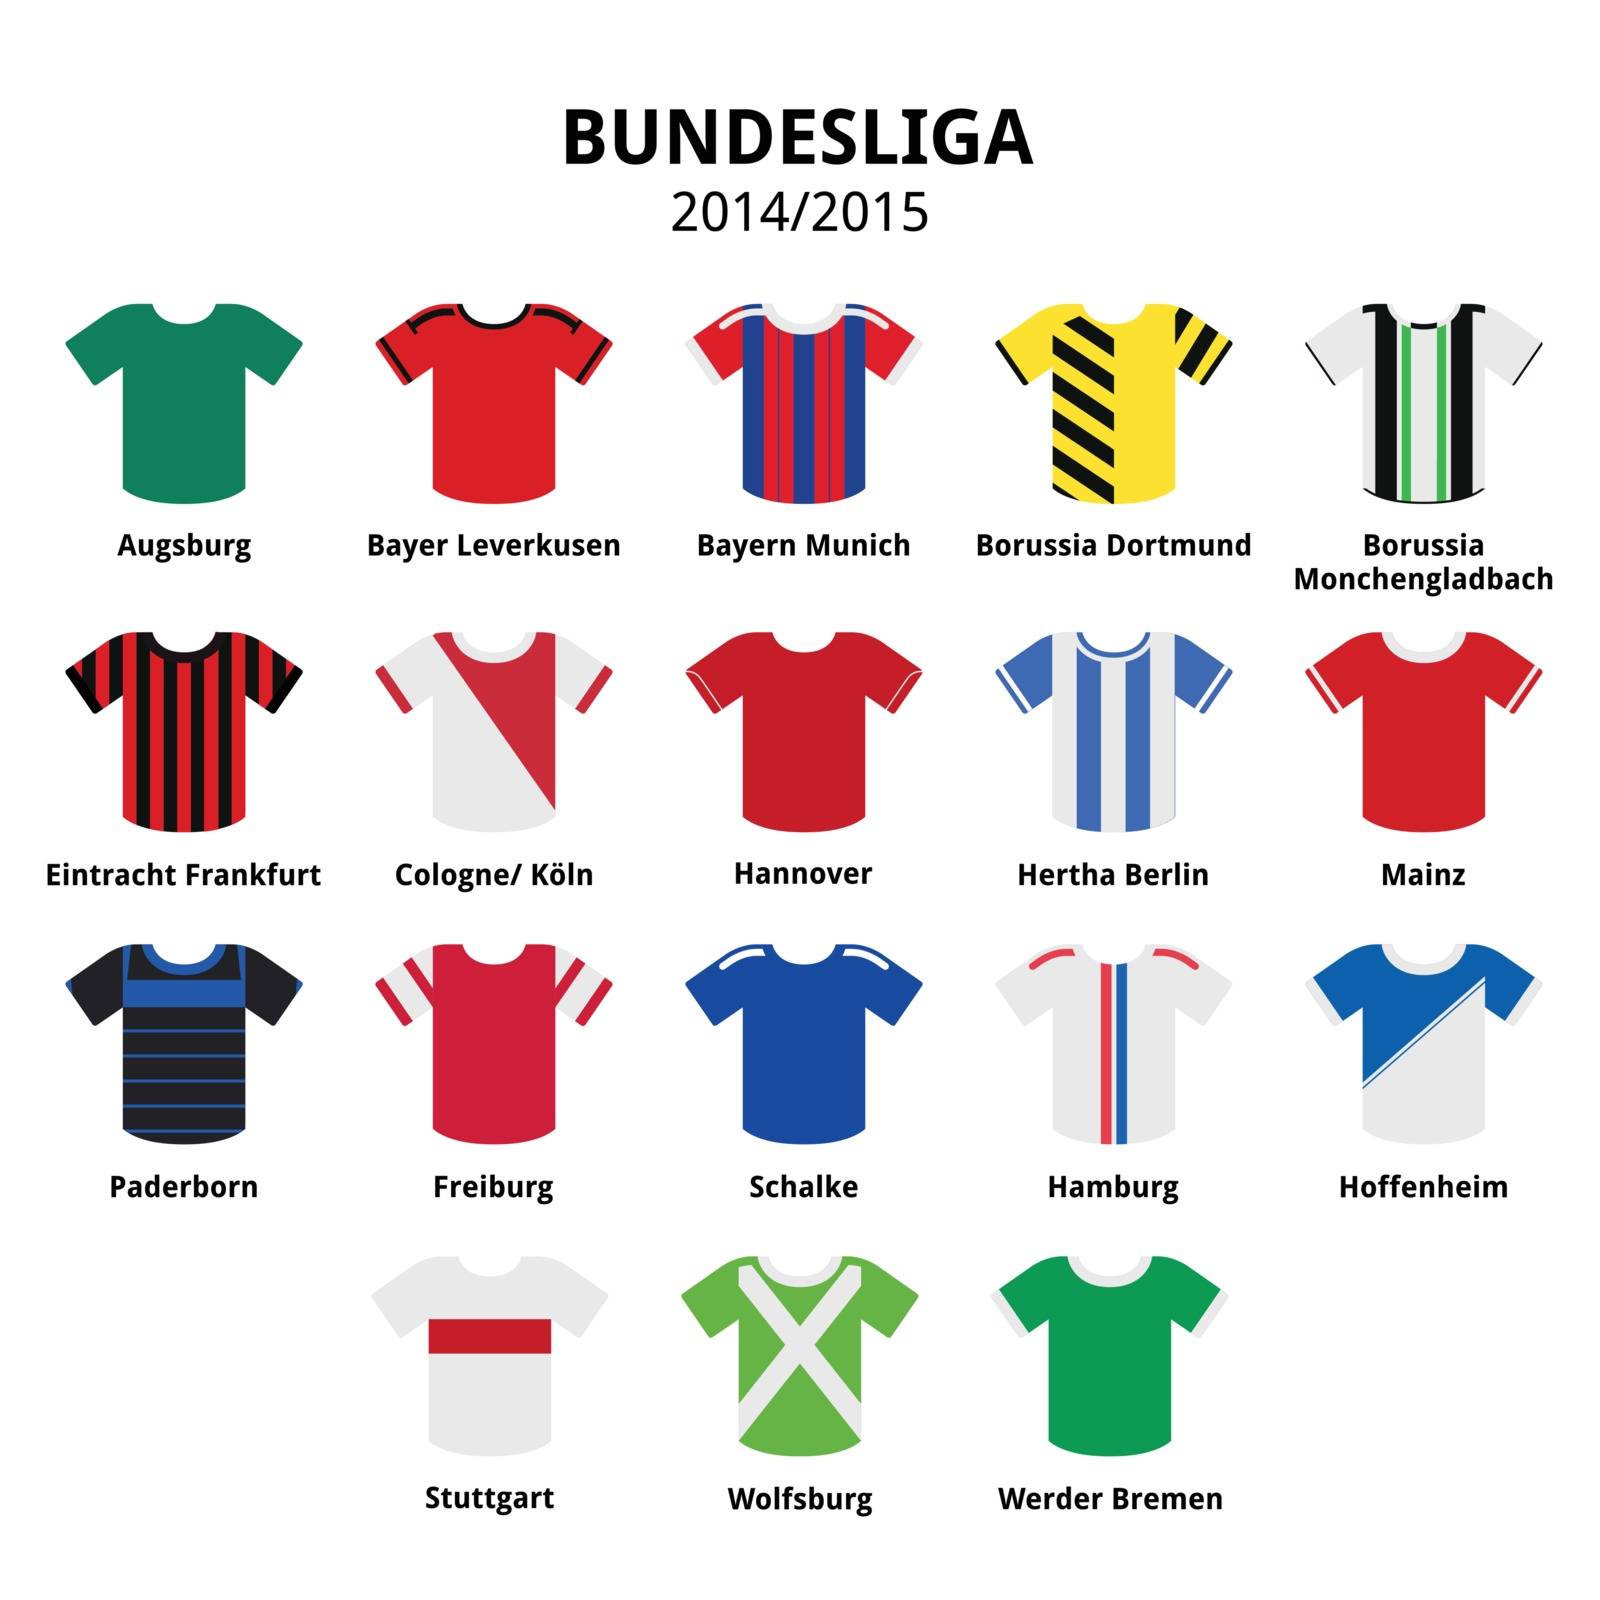 Bundesliga jerseys 2014 - 2015,German football league icons by RedKoala